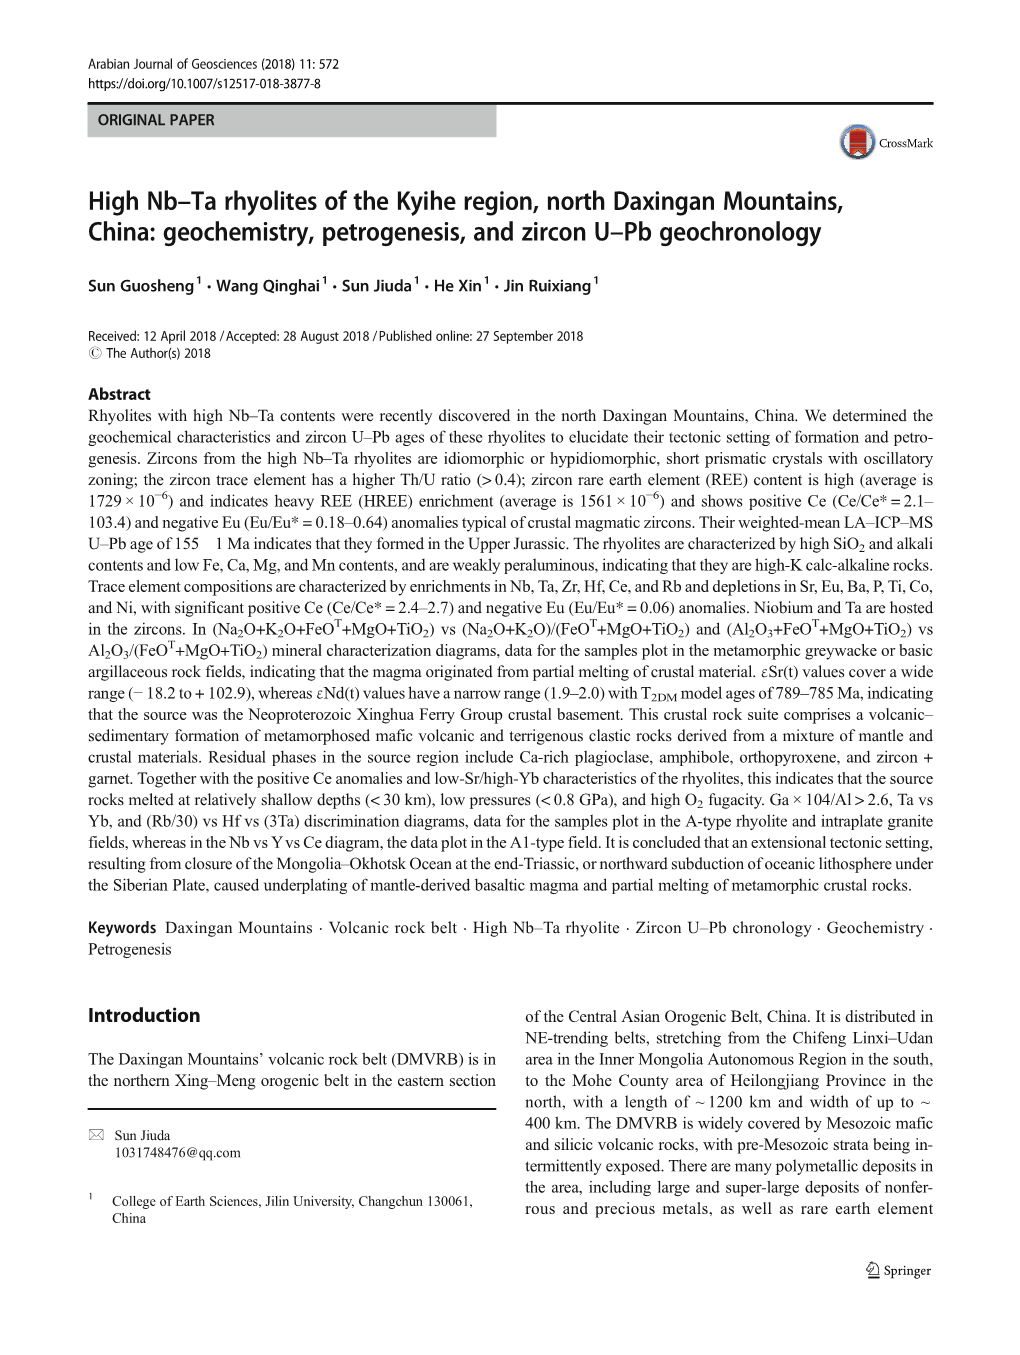 High Nb–Ta Rhyolites of the Kyihe Region, North Daxingan Mountains, China: Geochemistry, Petrogenesis, and Zircon U–Pb Geochronology